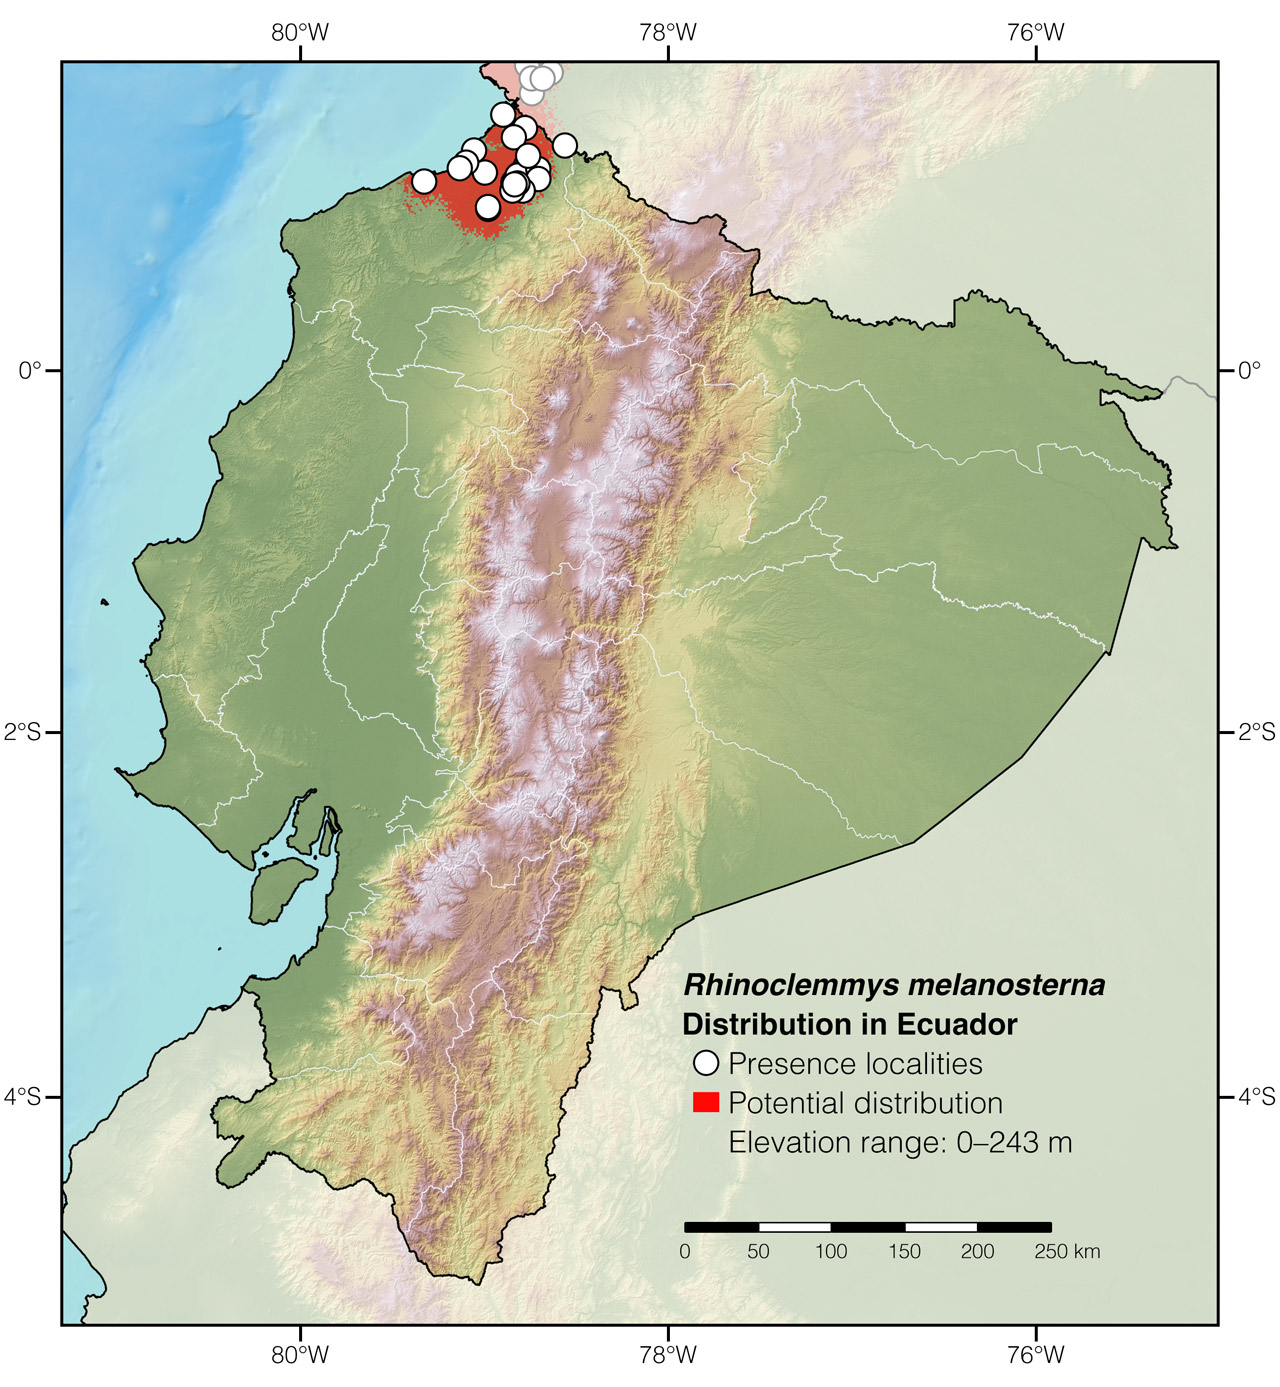 Distribution of Rhinoclemmys melanosterna in Ecuador